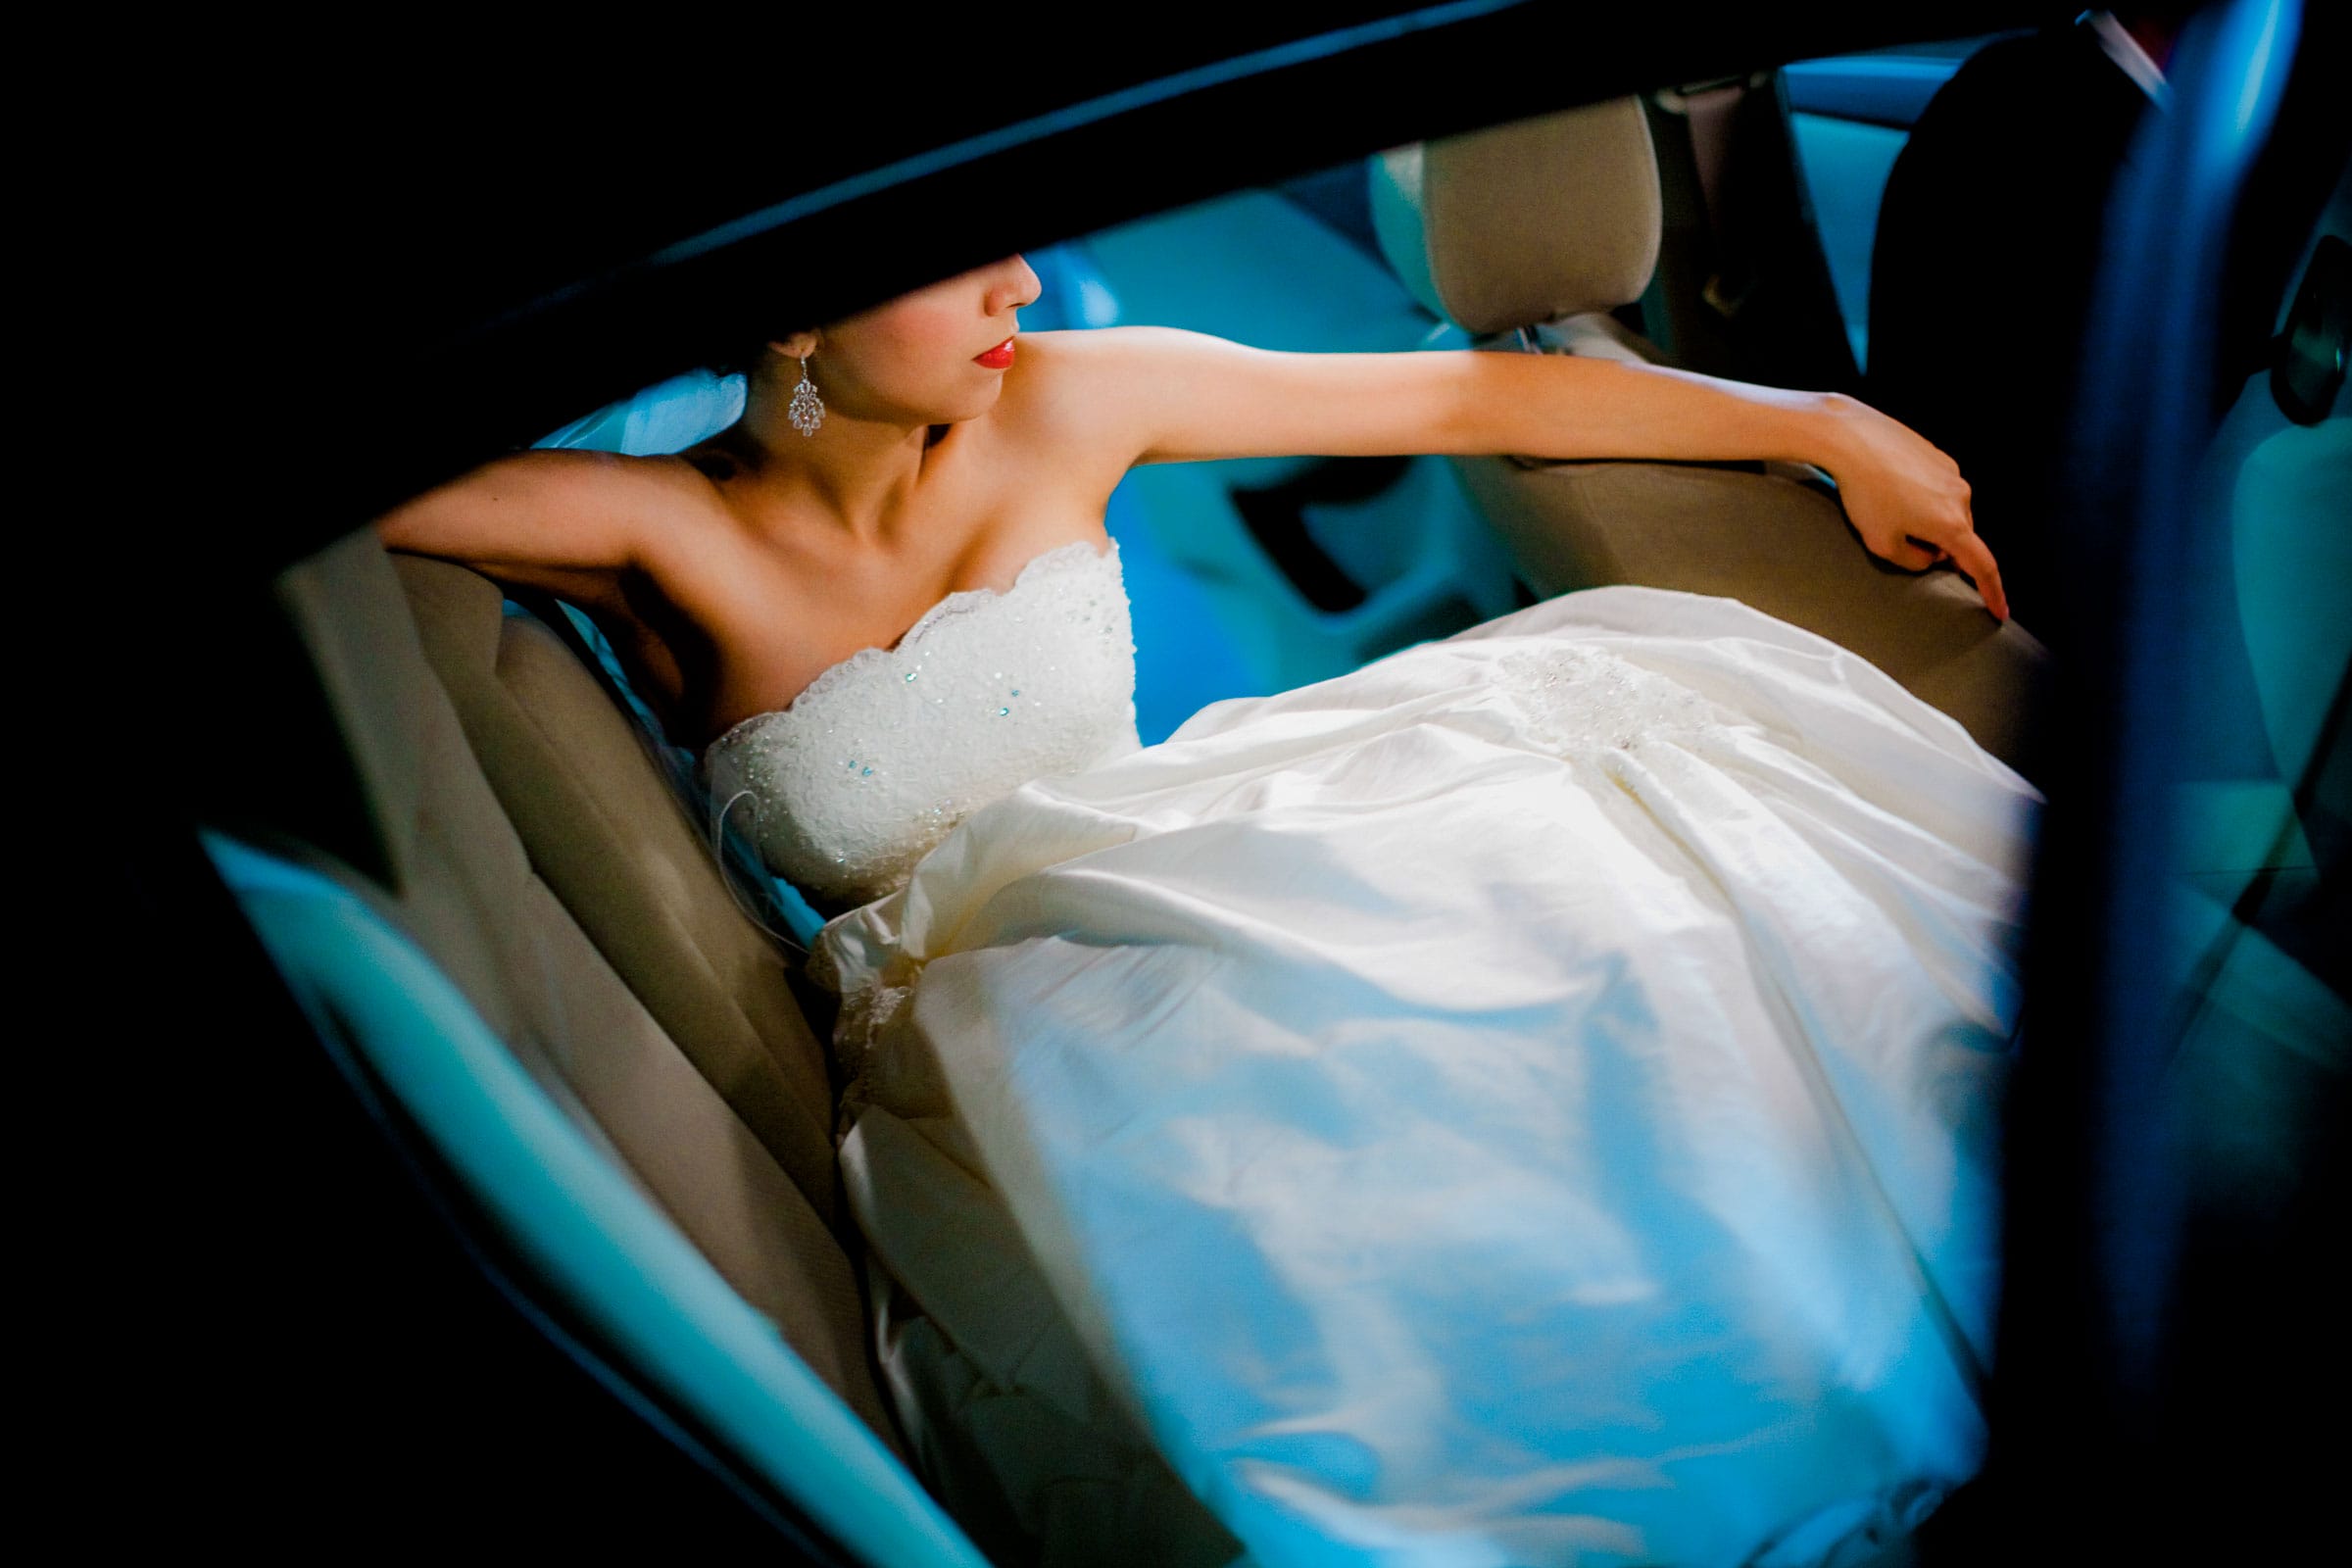 bride-in-a-car-at-night-mscb1124a.jpg